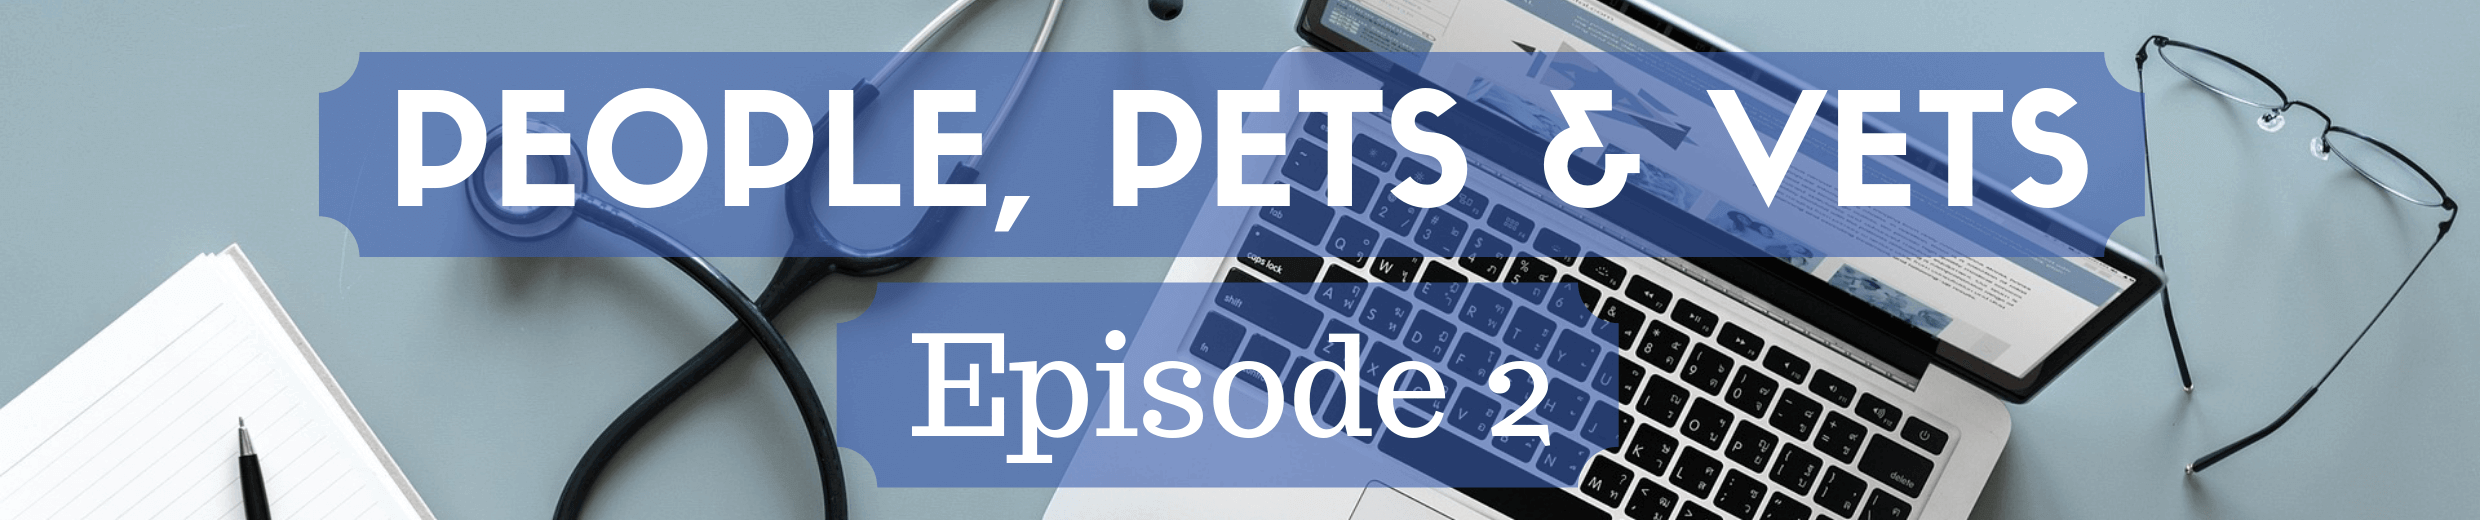 People, Pets & Vets: Episode 2